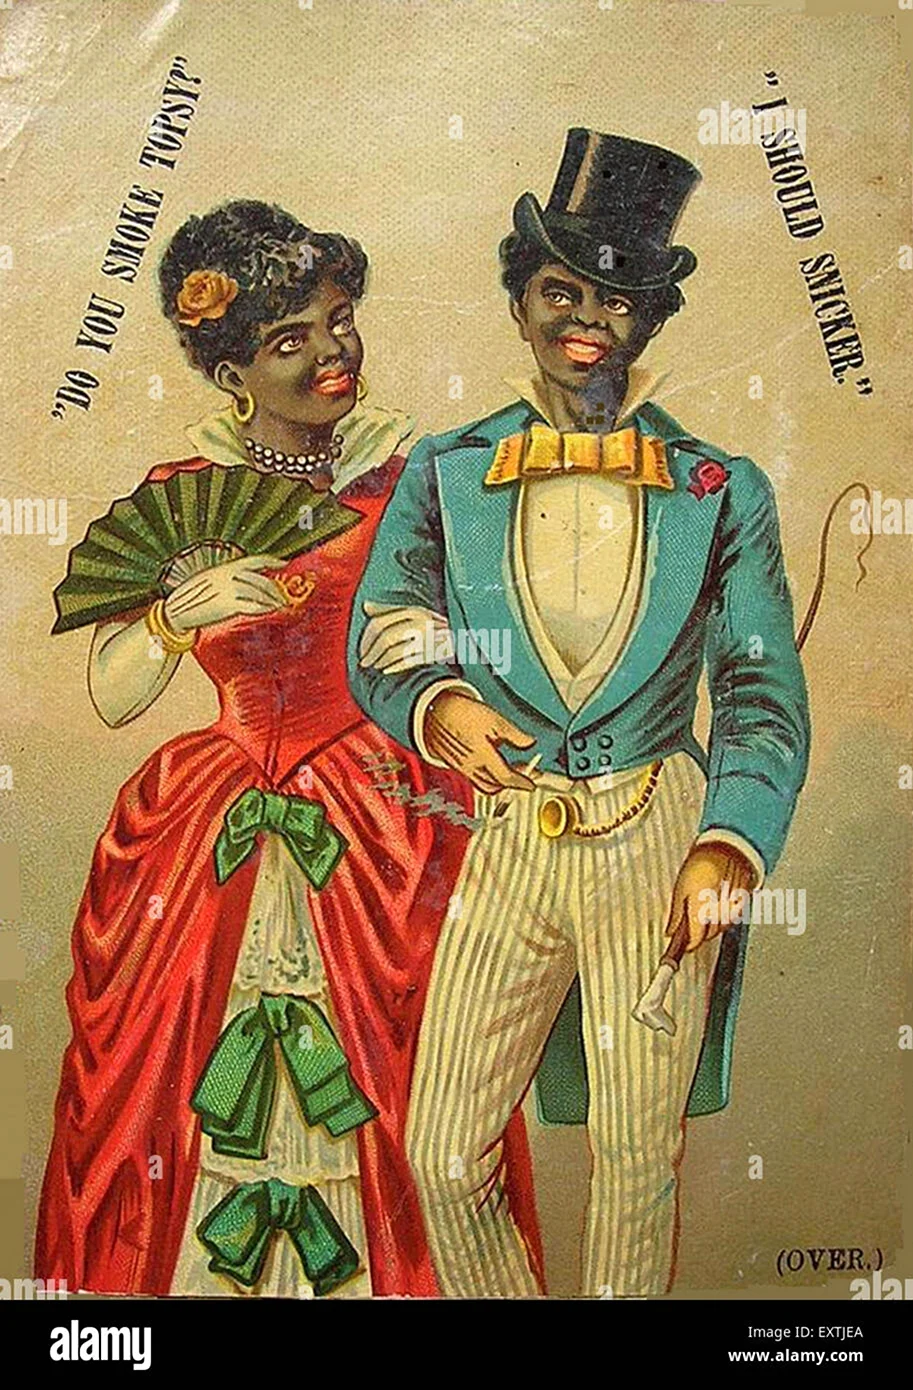 Рекламные плакаты 19 века